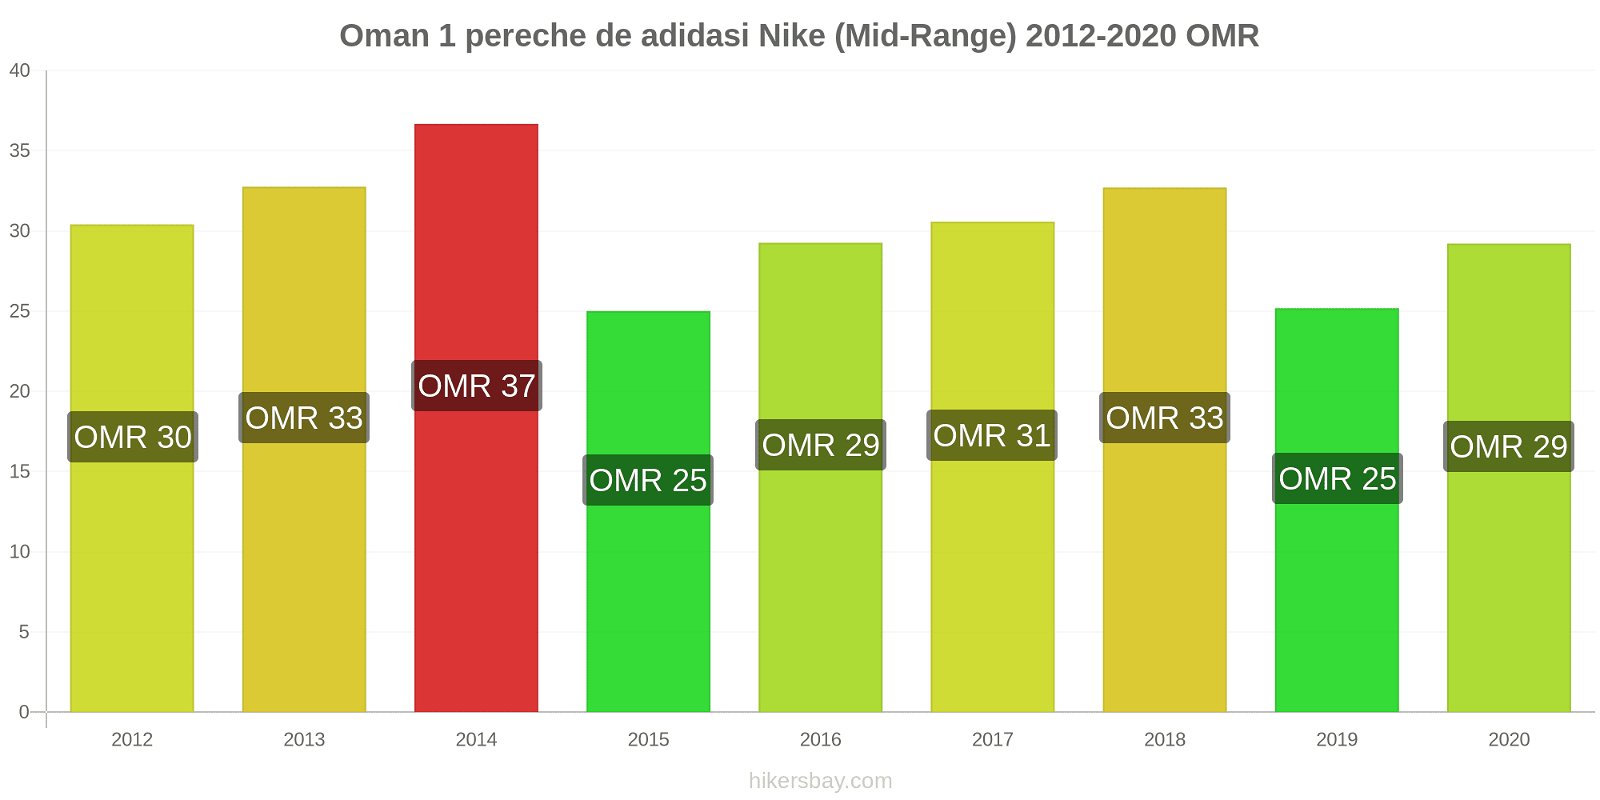 Oman modificări de preț 1 pereche de adidasi Nike (Mid-Range) hikersbay.com